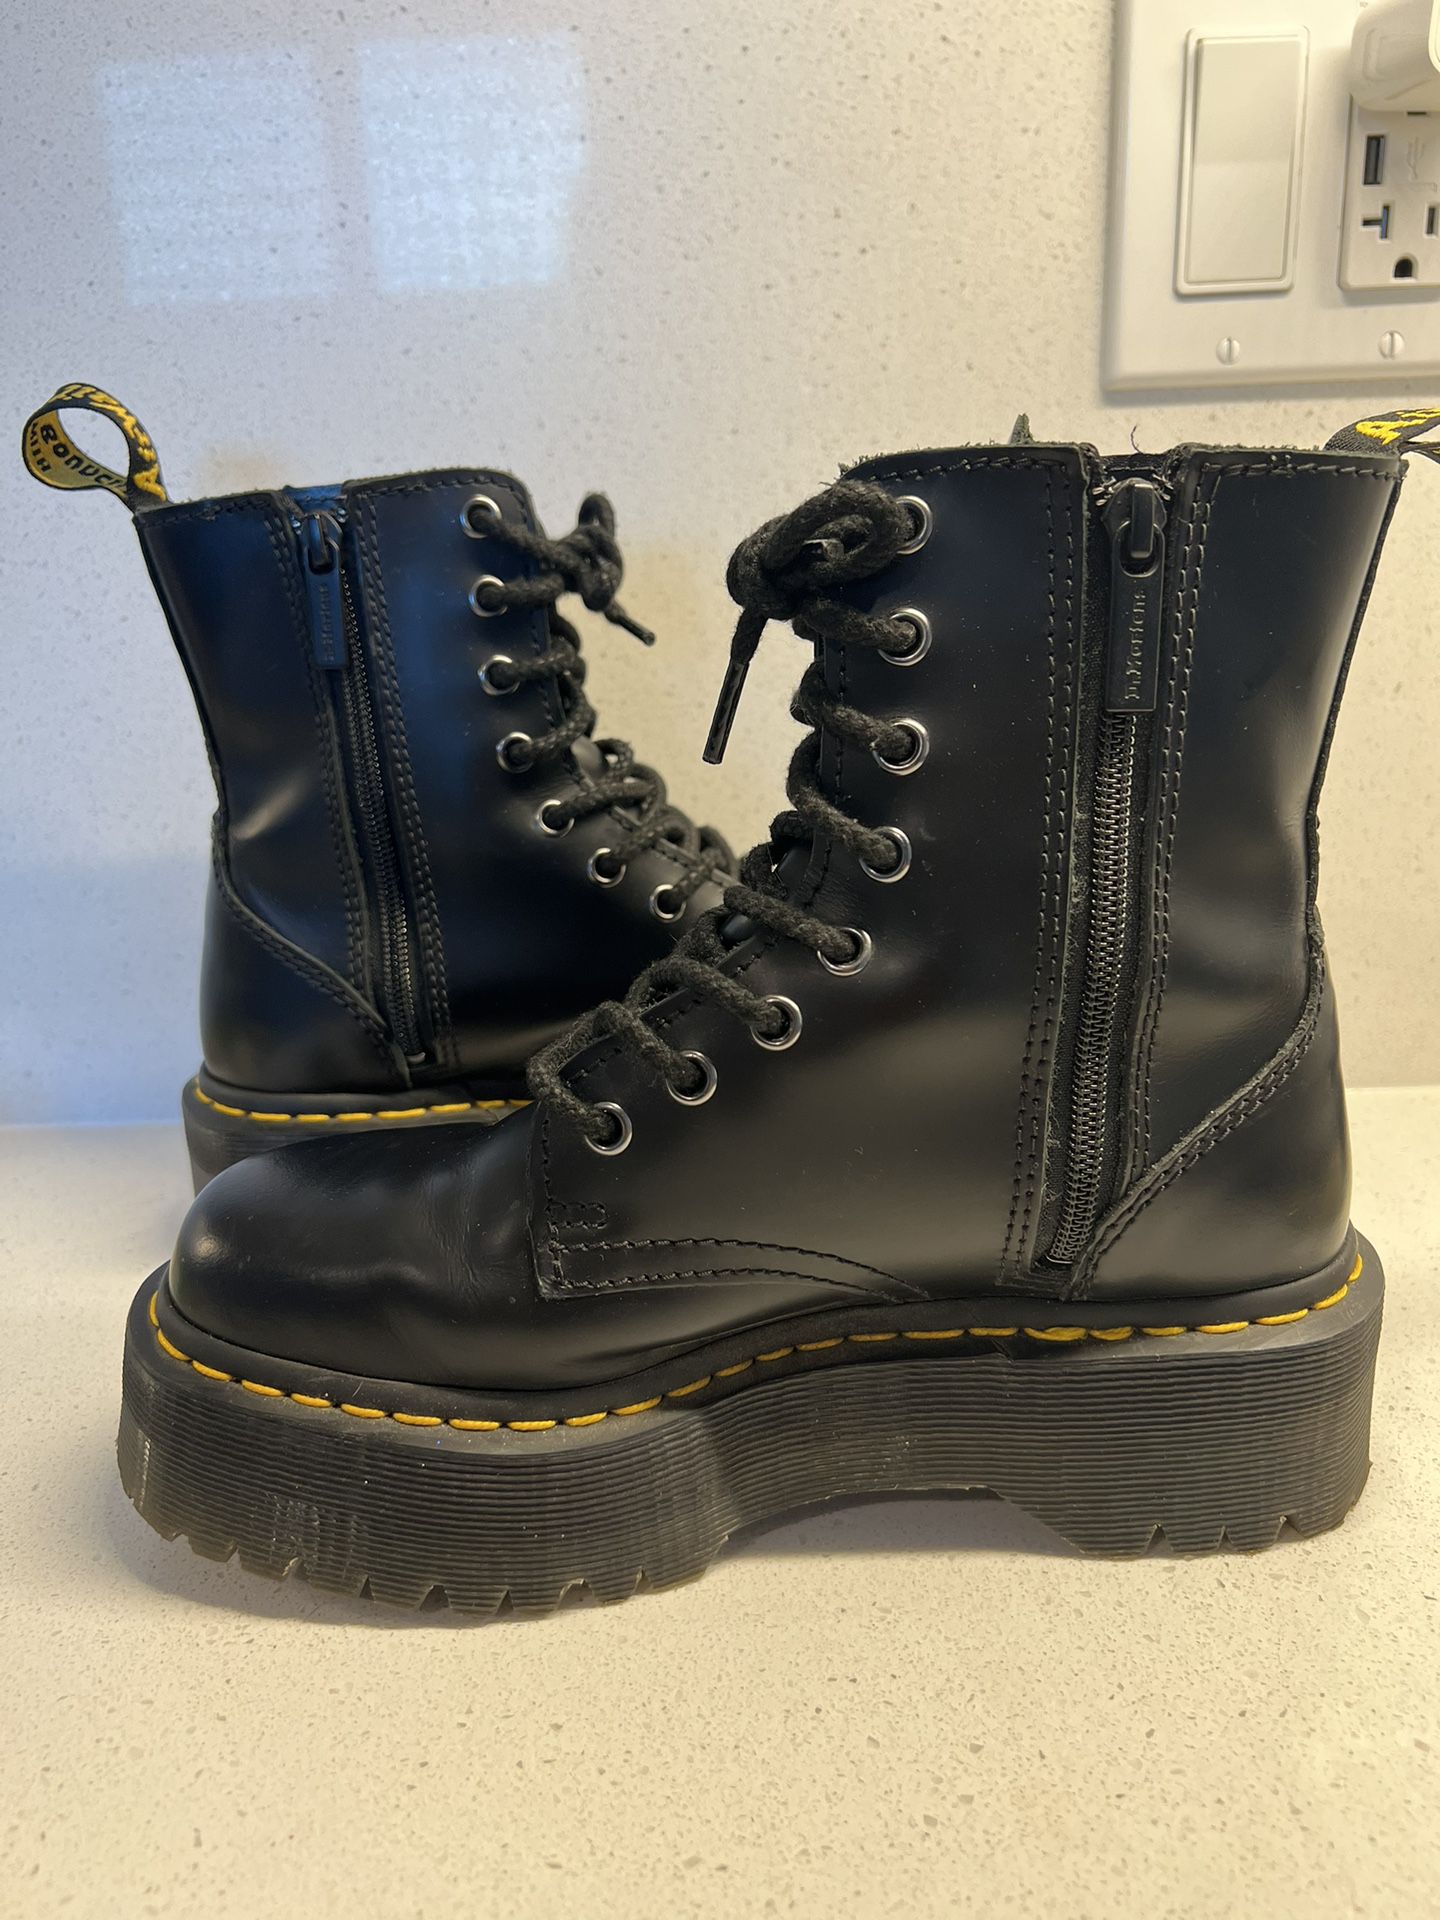 size 6 doc martens platform boots